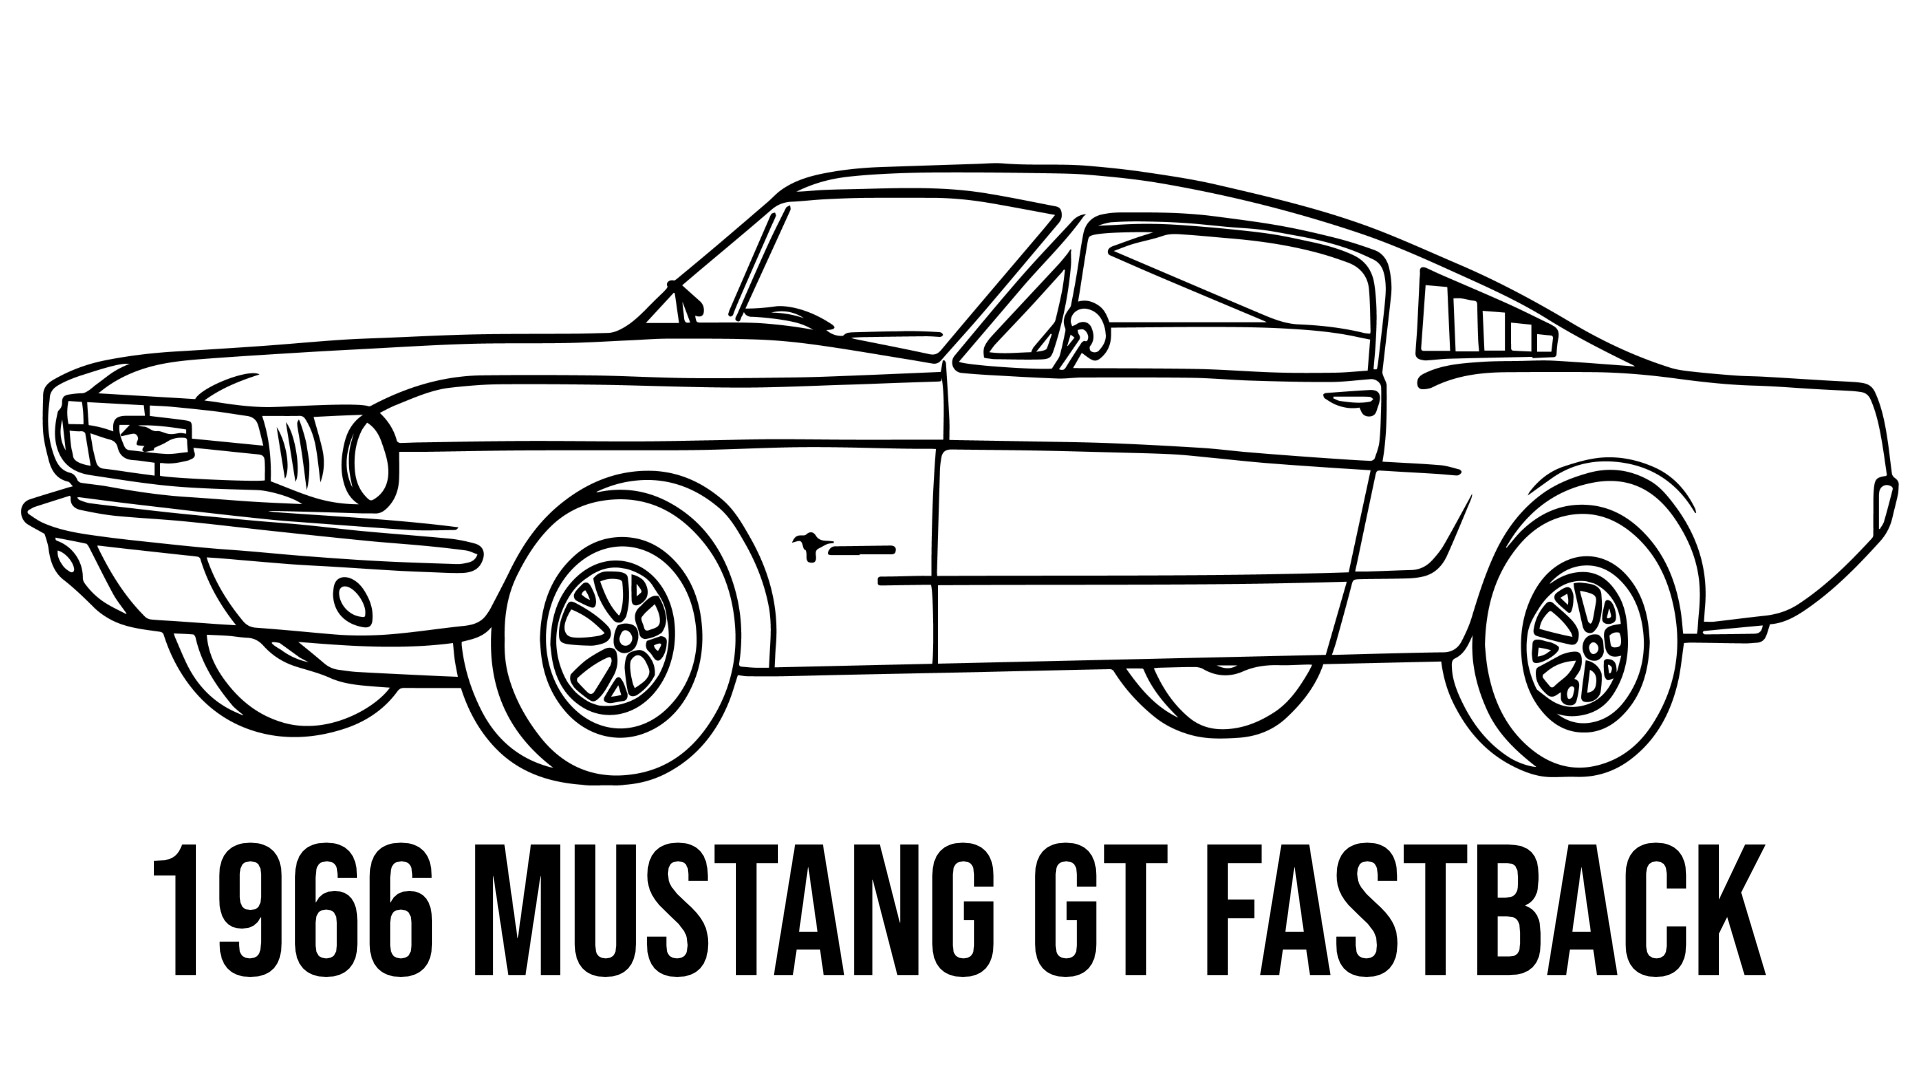 1966 Mustang GT fastback coming soon